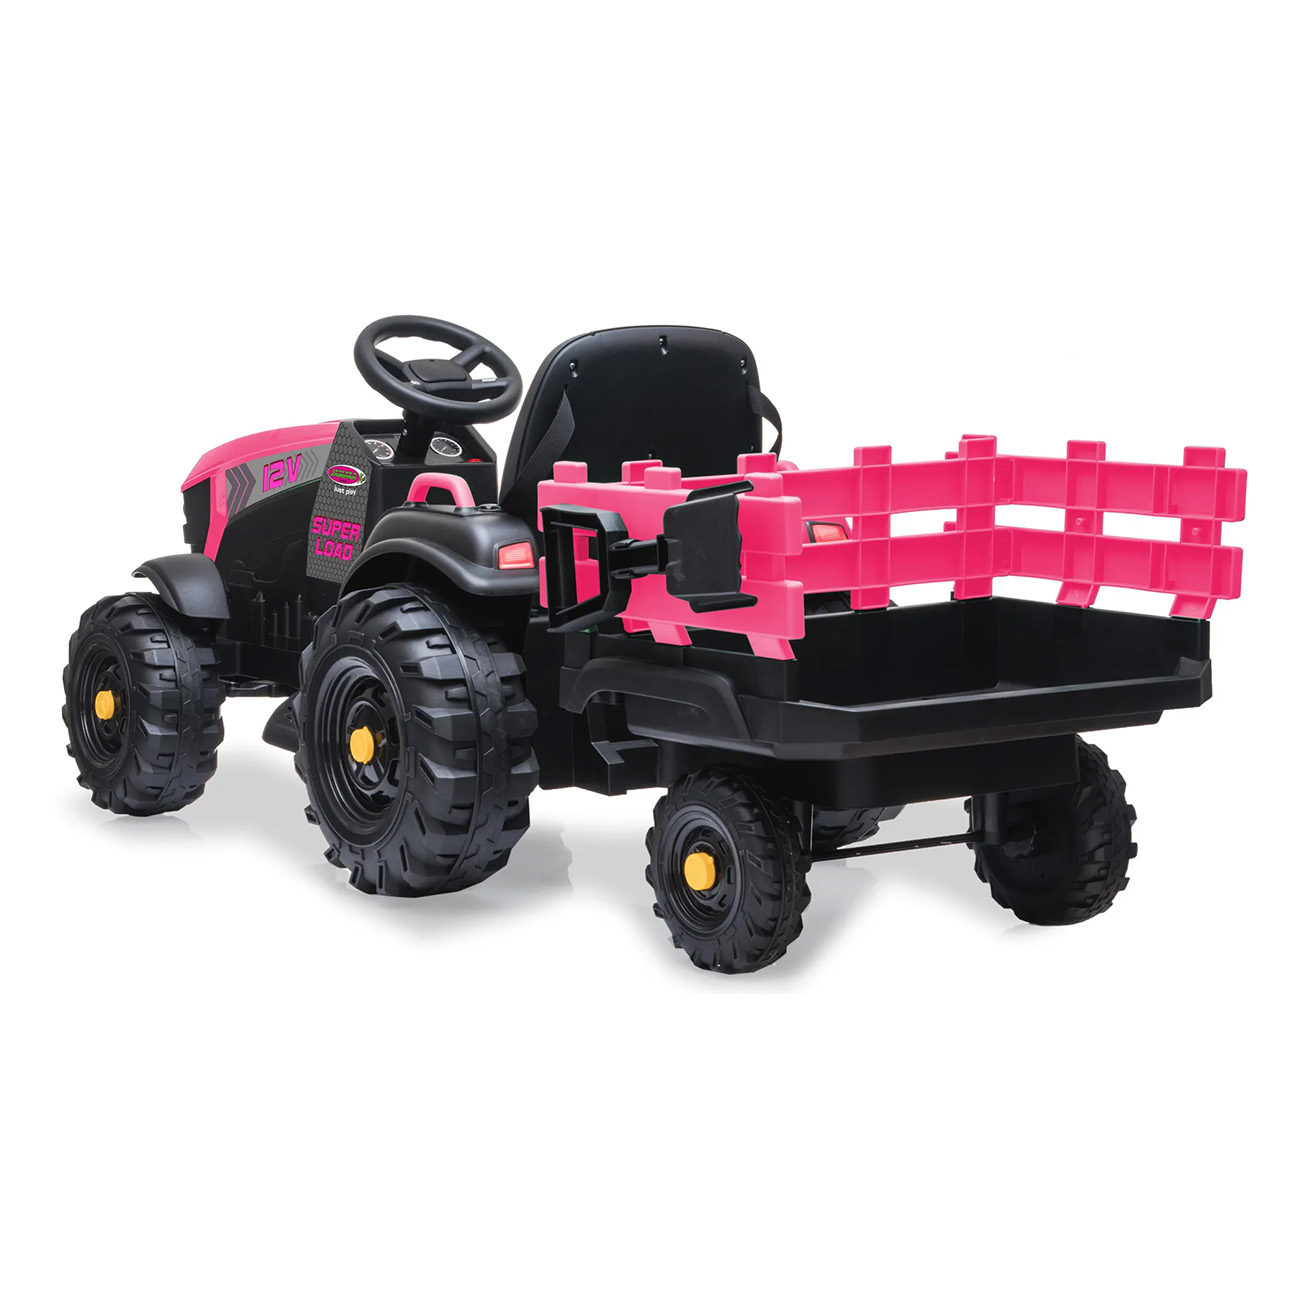 JAMARA Ride-on Traktor Super Kinder-Elektroauto Load 12V